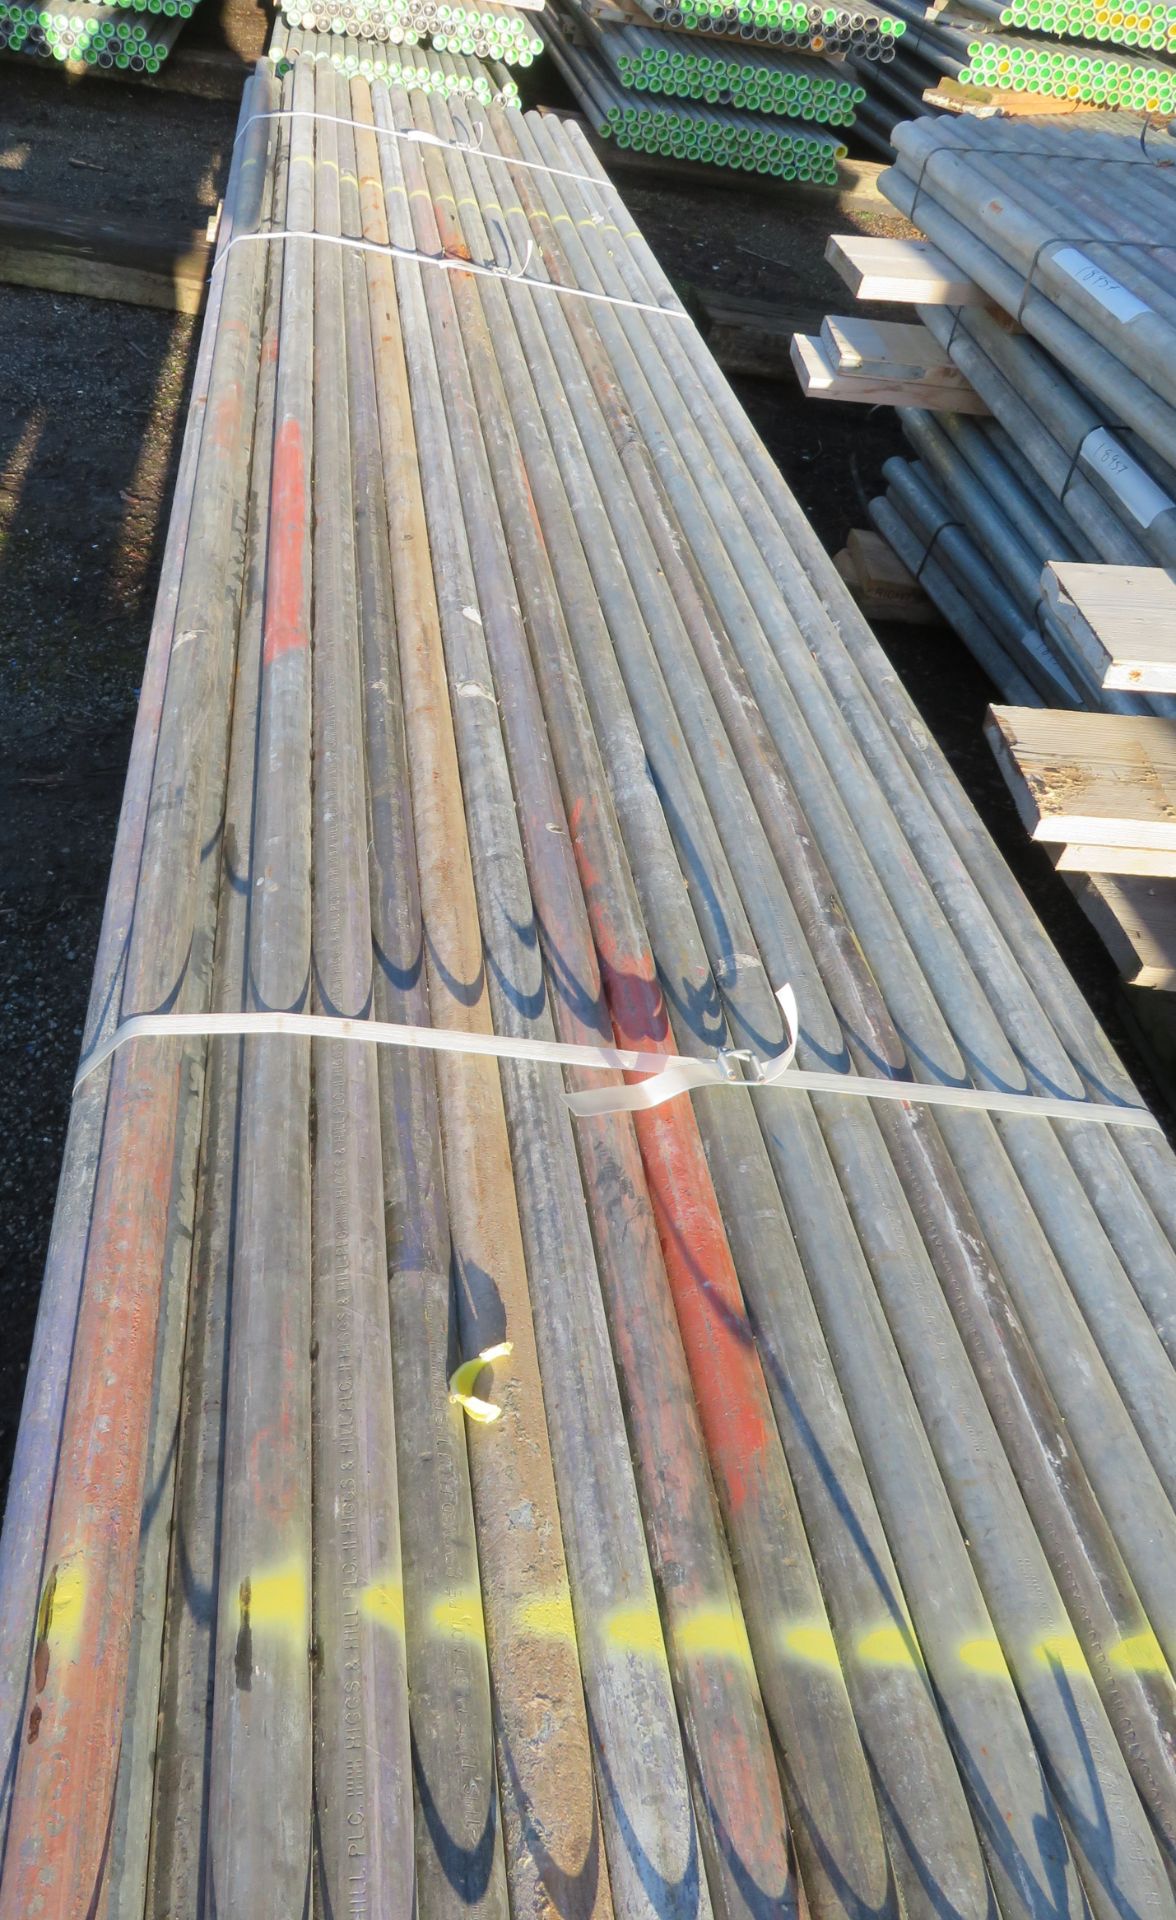 100x Various Length Galvanised Steel Scaffolding Poles. Lengths Range Between 16ft - 14ft. - Image 5 of 5